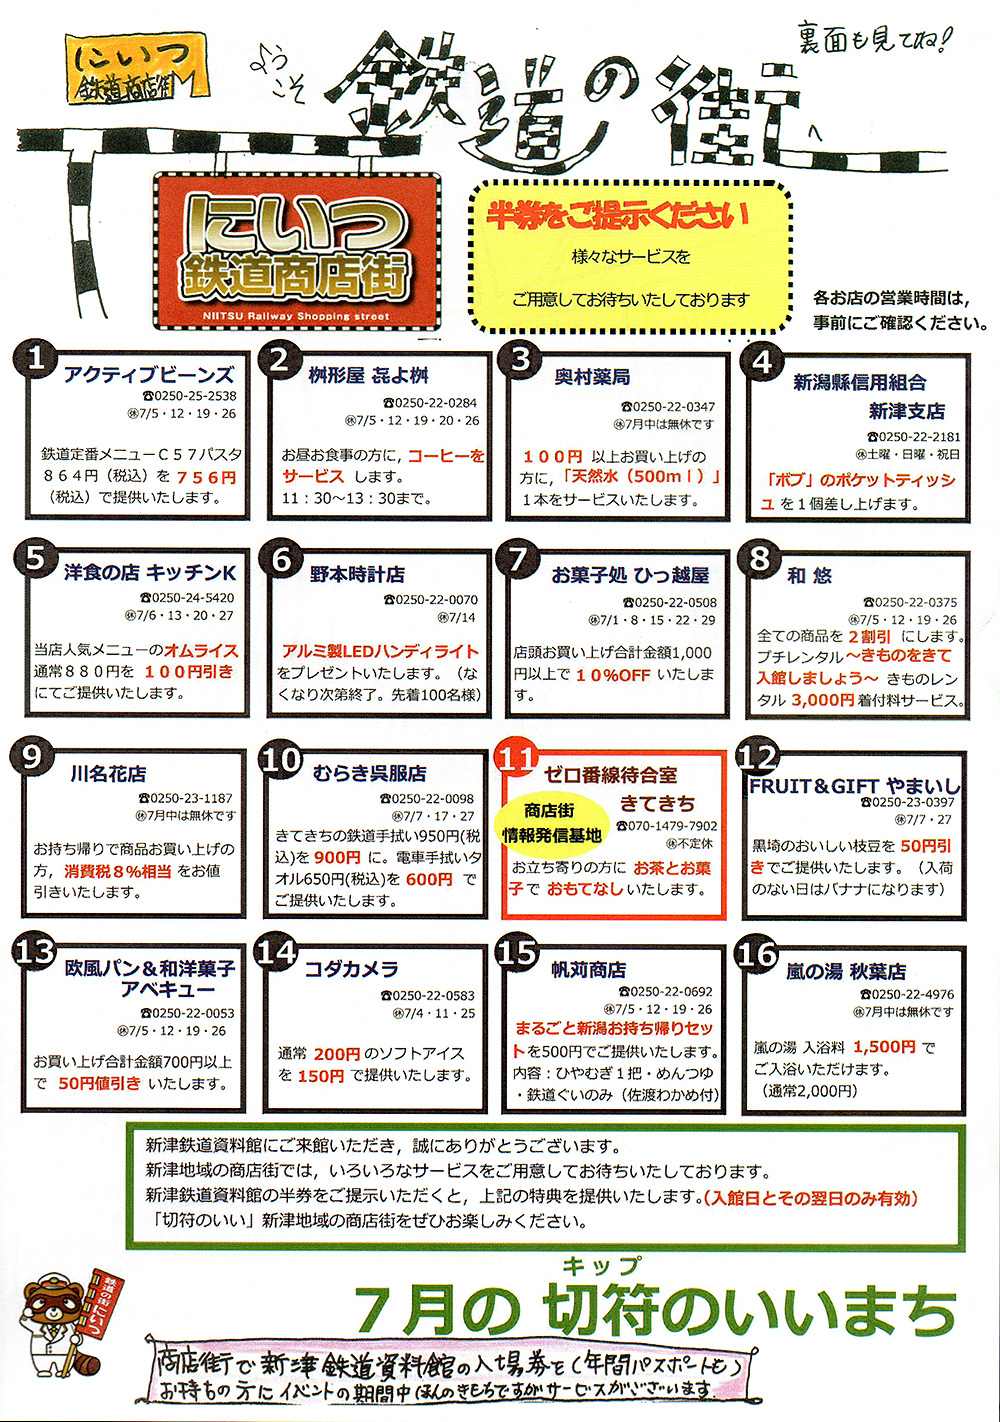 http://www.nomoto-tokeiten.jp/info/2015/07/08/img041.jpg